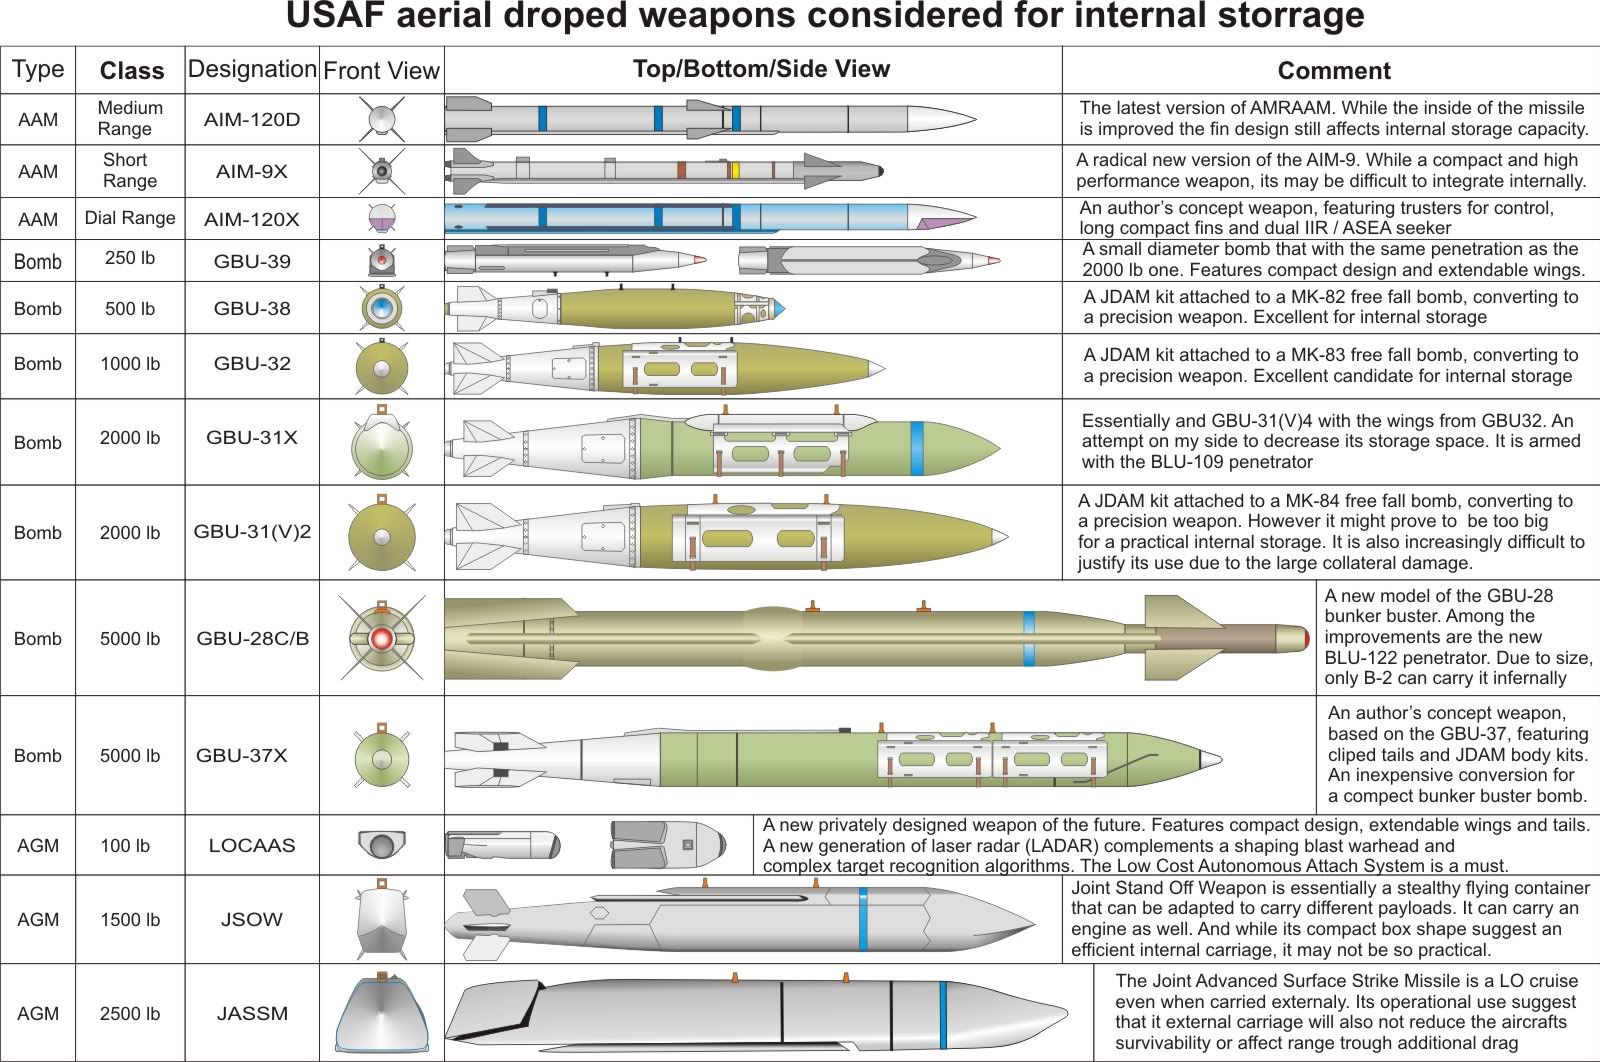 USAF Weapons for internal storrage   